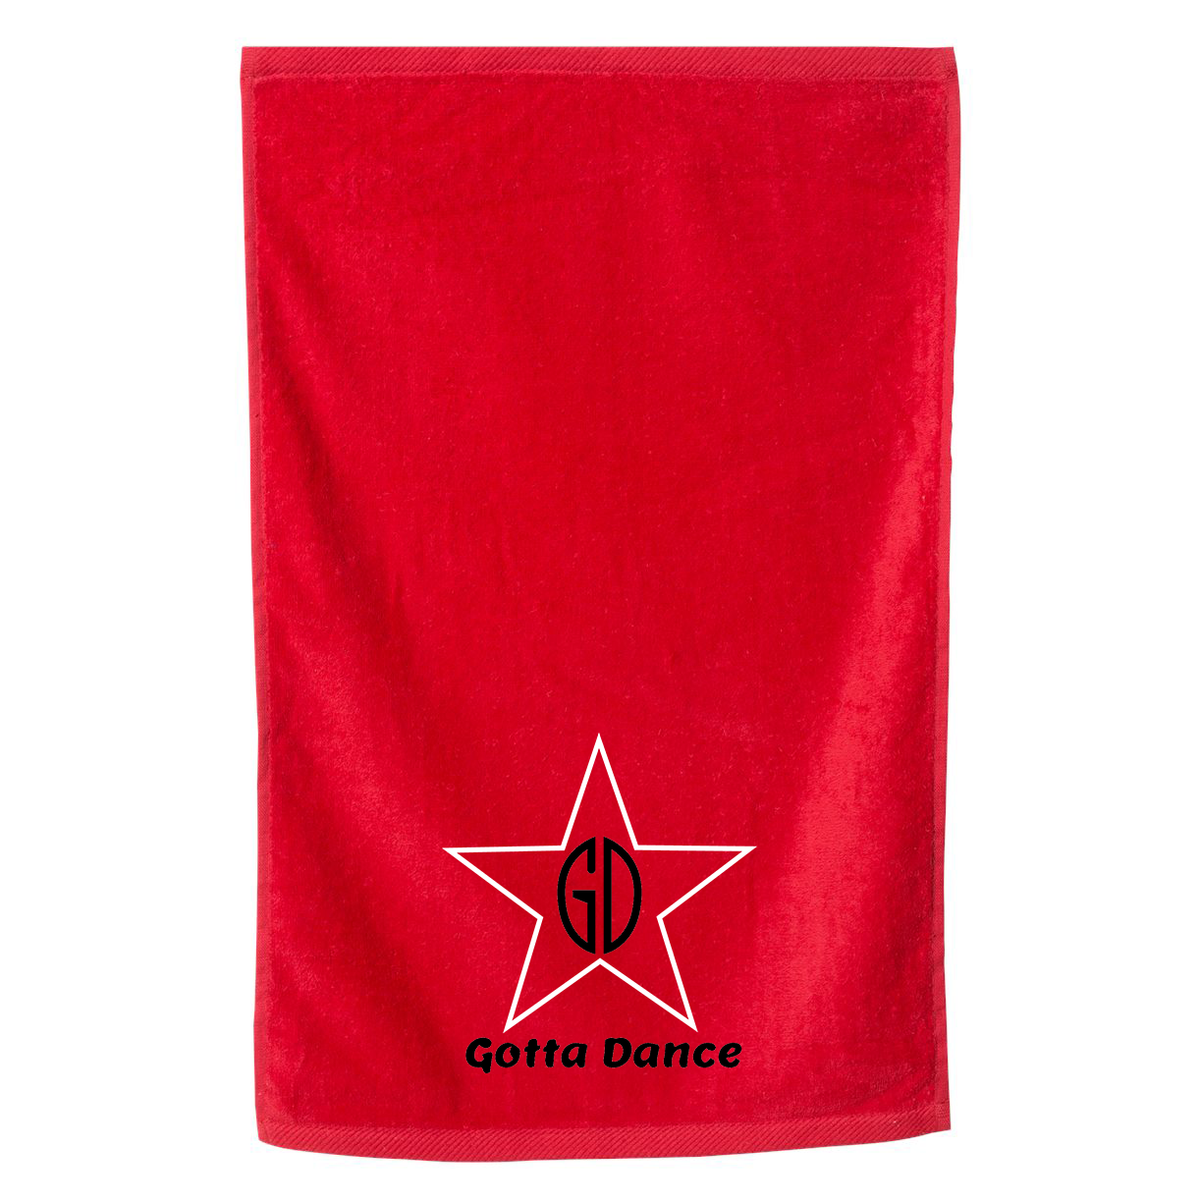 Gotta Dance Deluxe Hemmed Towel